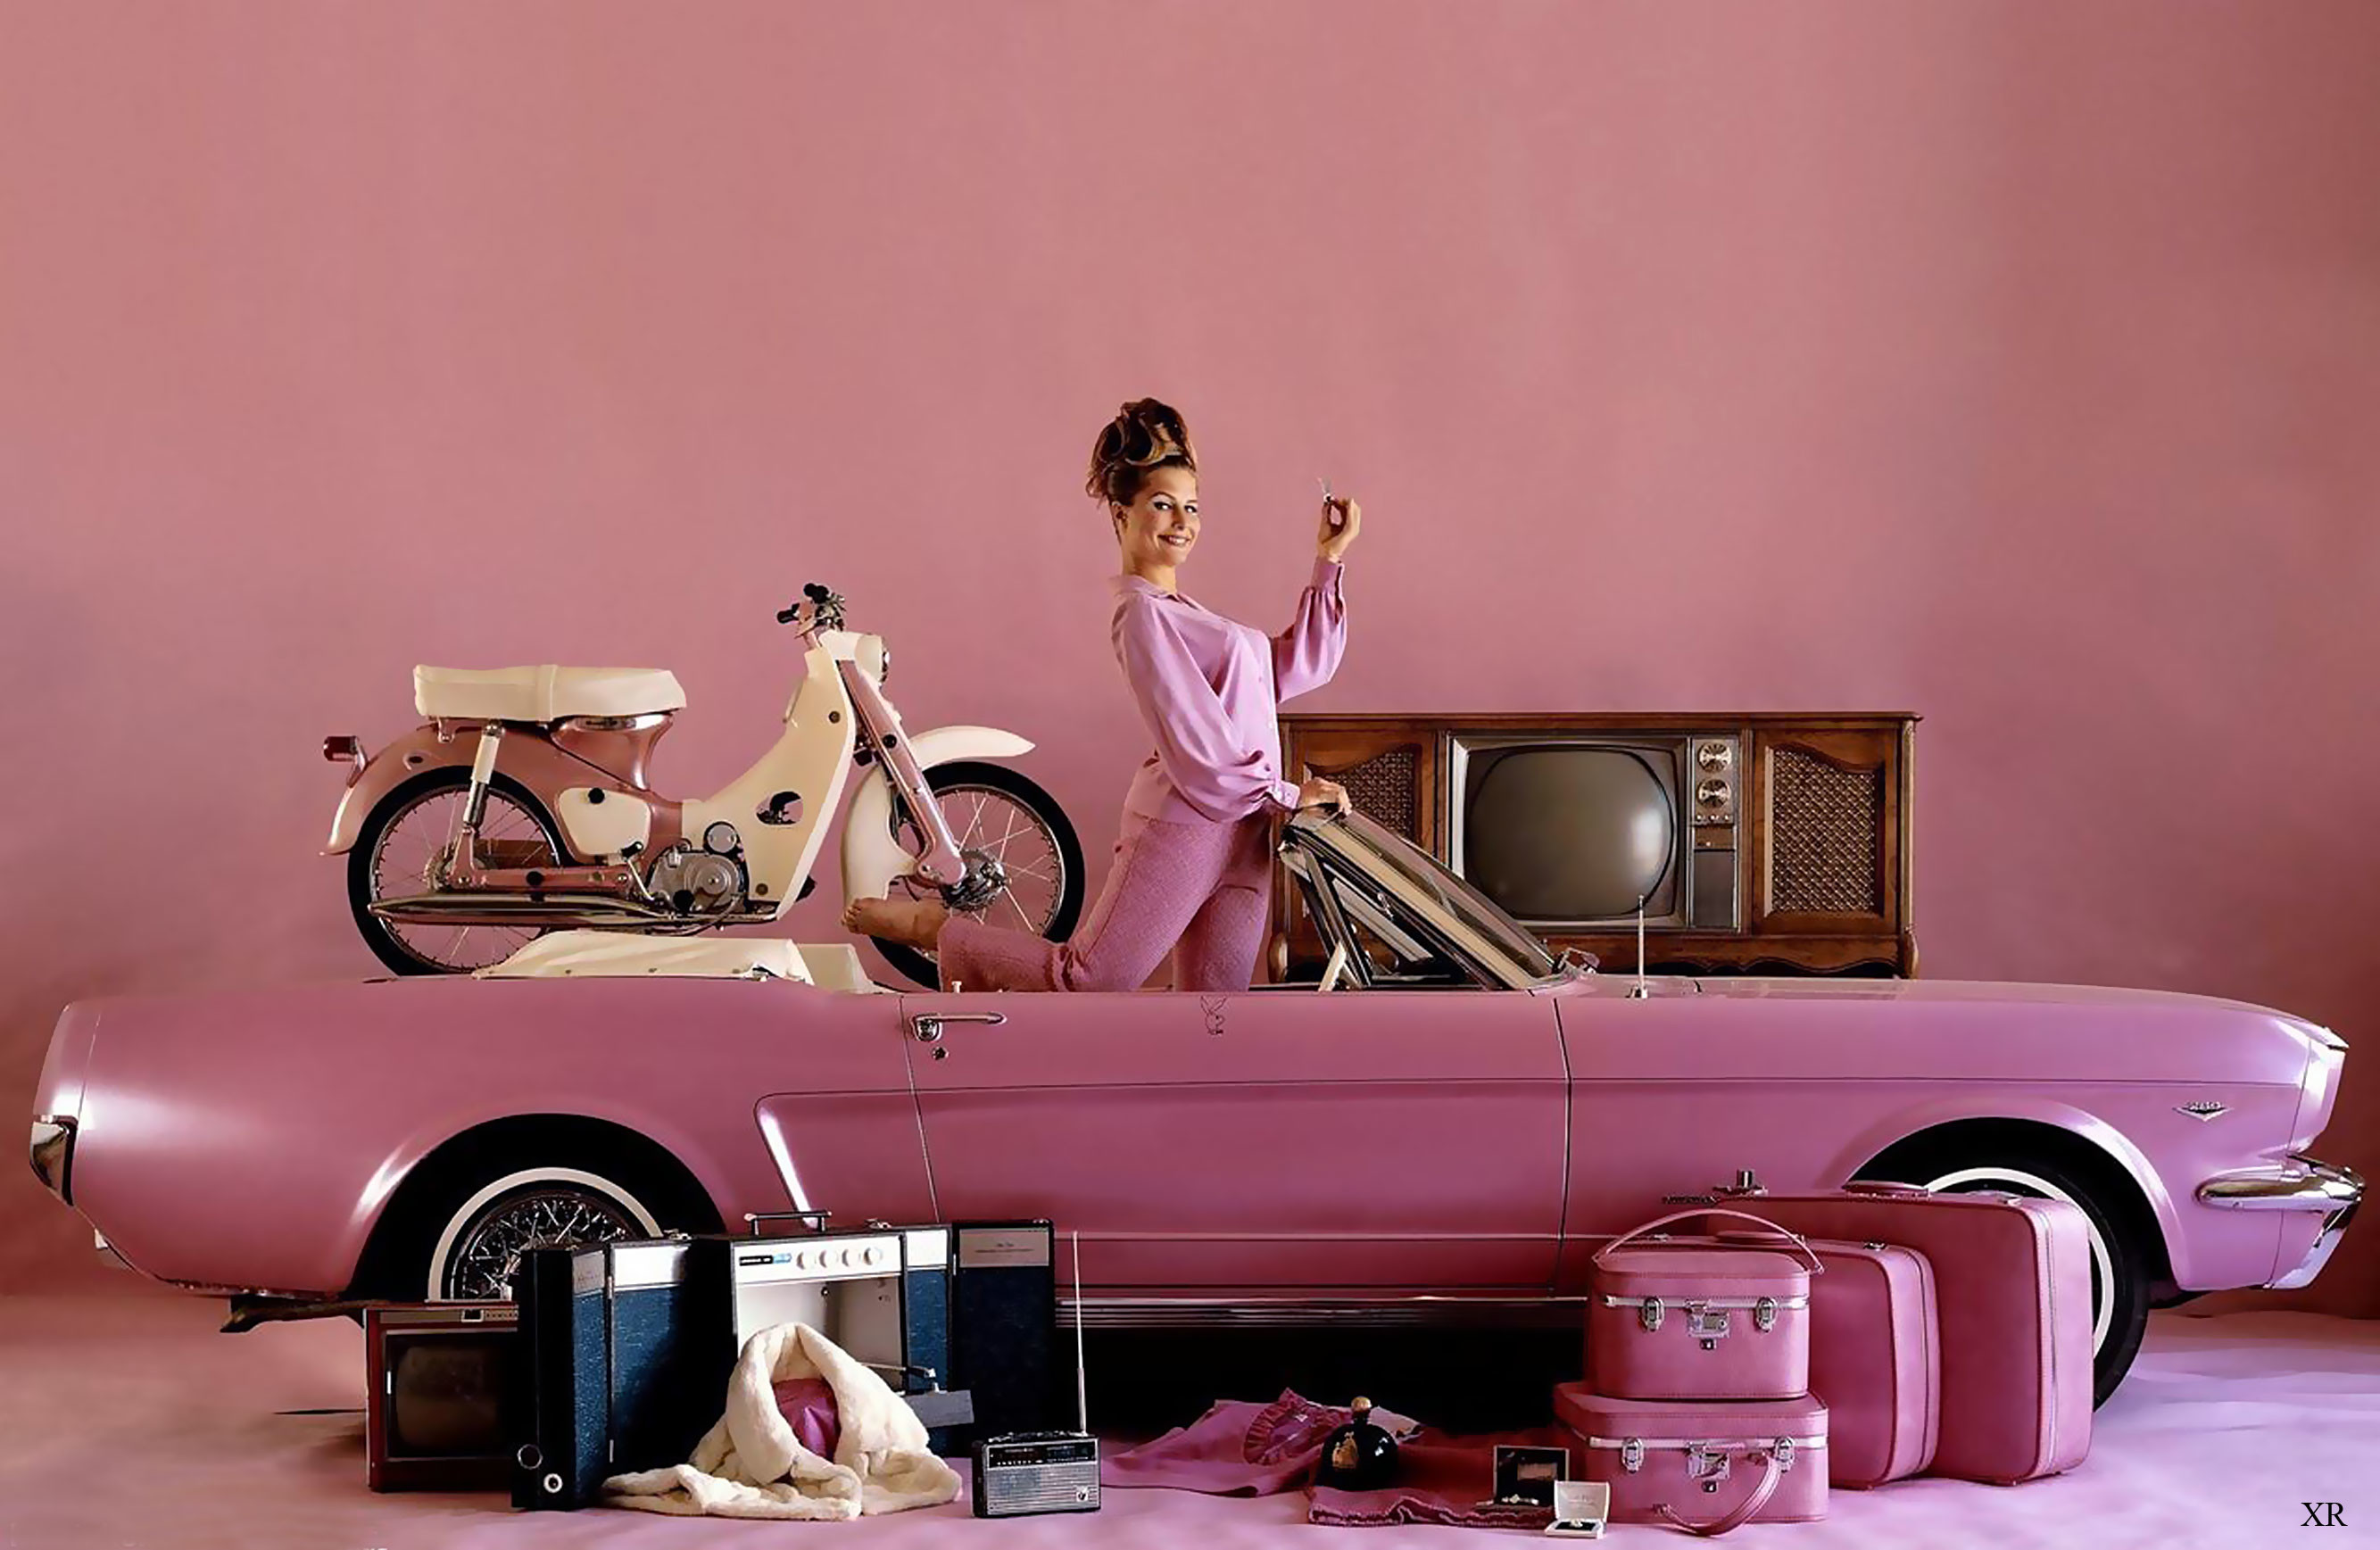 2667x1737 Wallpaper : Buick, vintage, wheels, Ford, pink, Vintage car, Mercury,  Chevrolet, Cadillac, magazine, 1960s, nostalgia, desoto, Mustang, retro,  advertising, ...